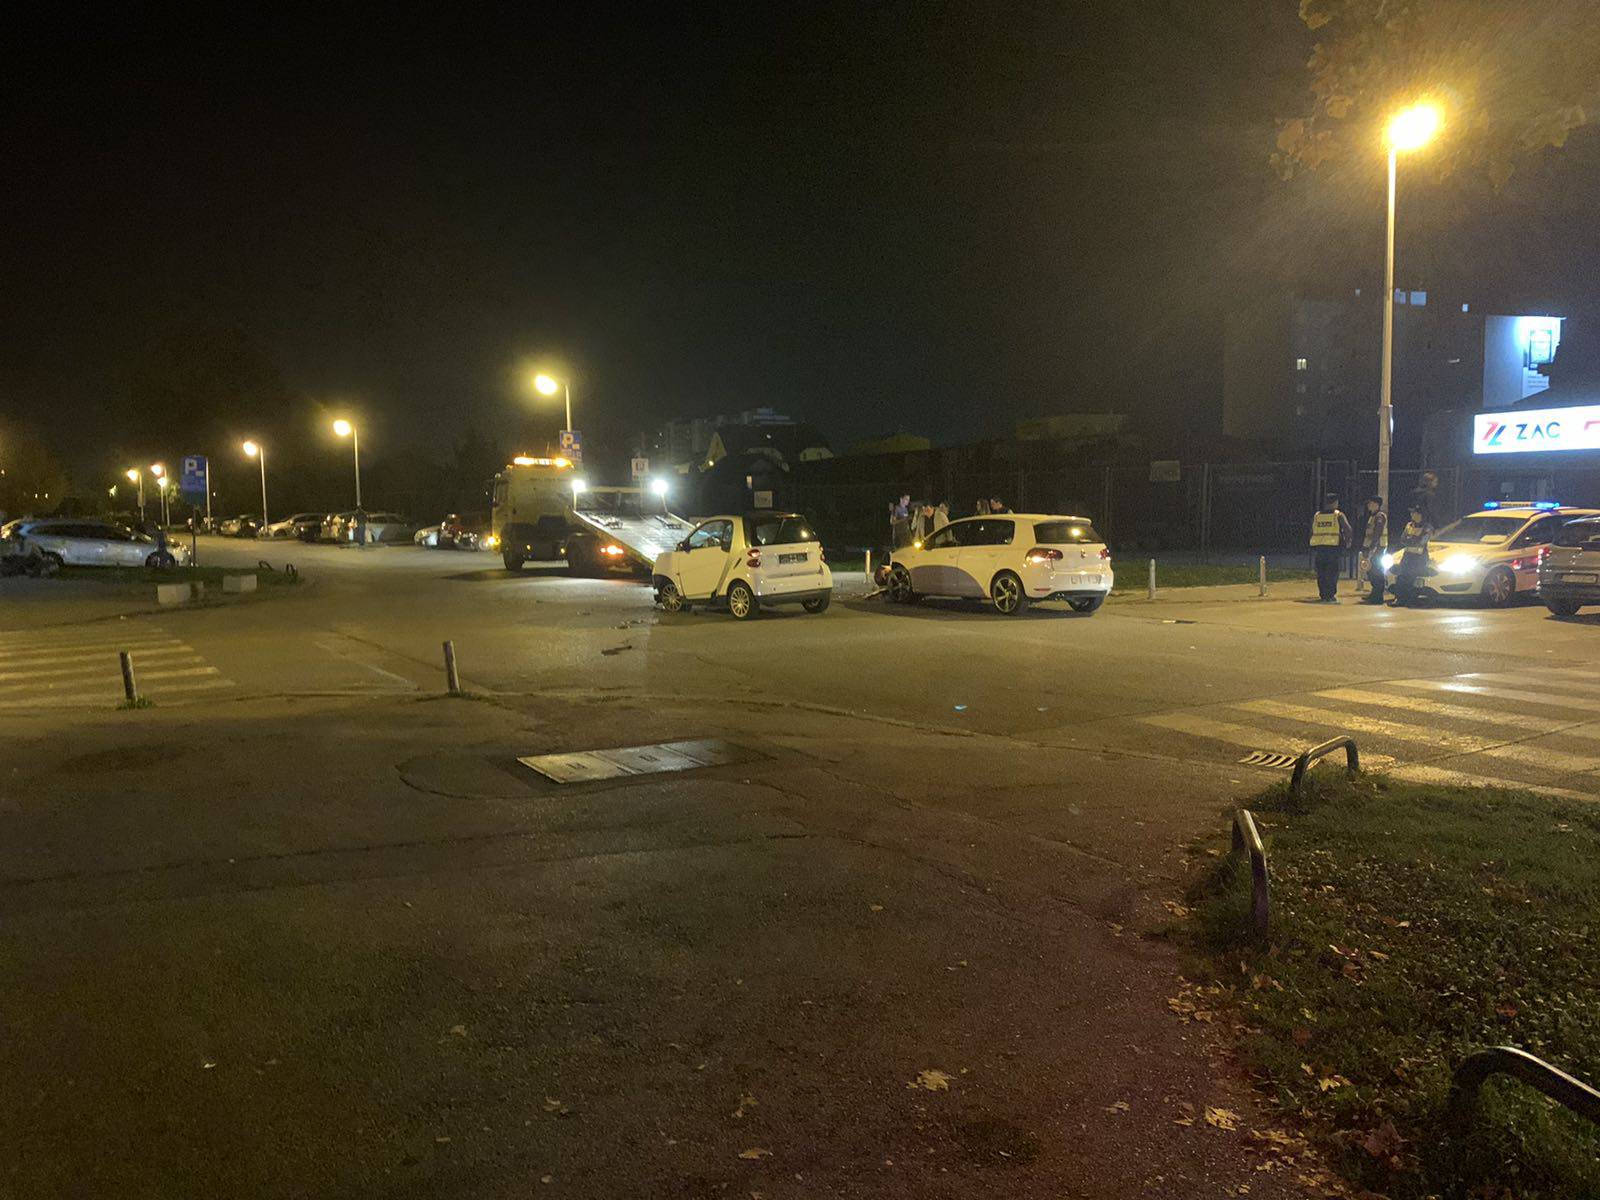 Krš i lom u Dubravi: Sudar dva auta, vozača odveli na traumu